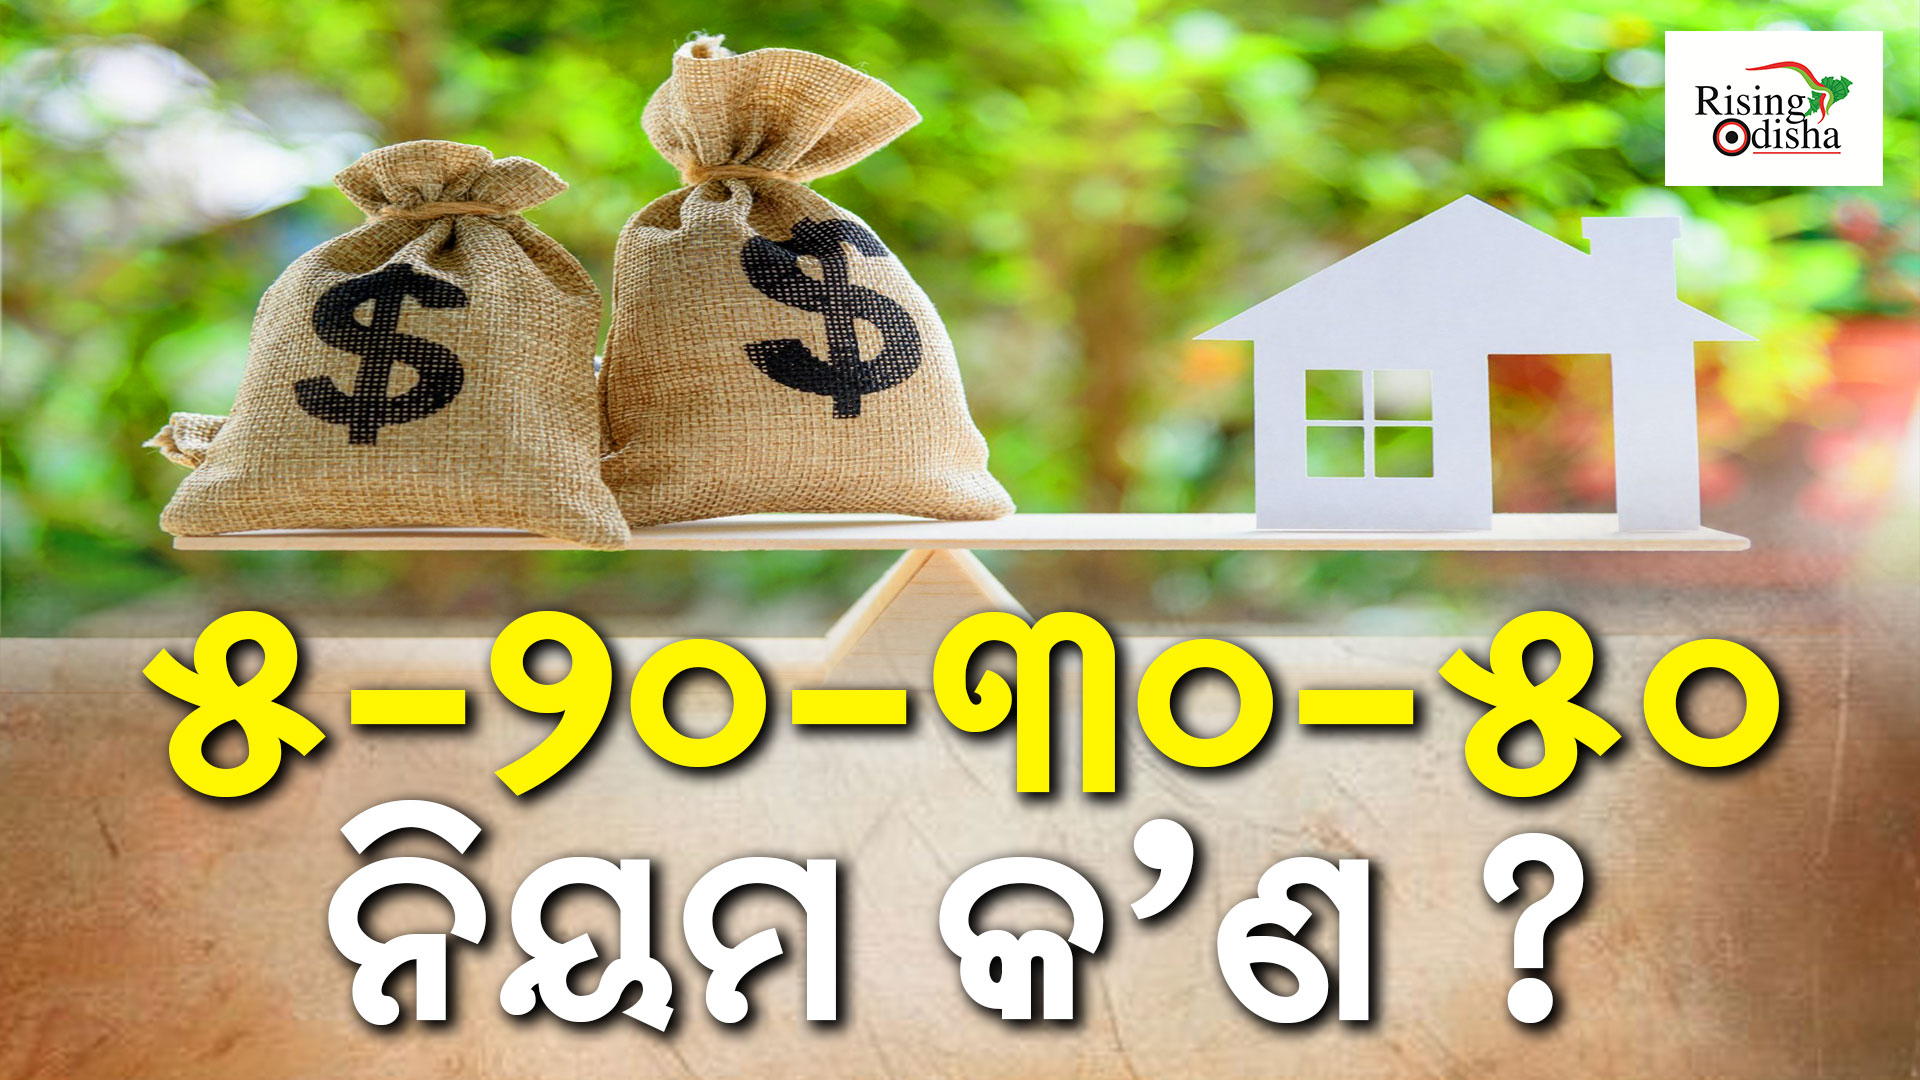 home loan process, home loan calculation method, home loan tips, OdiaBlog, RisingOdisha